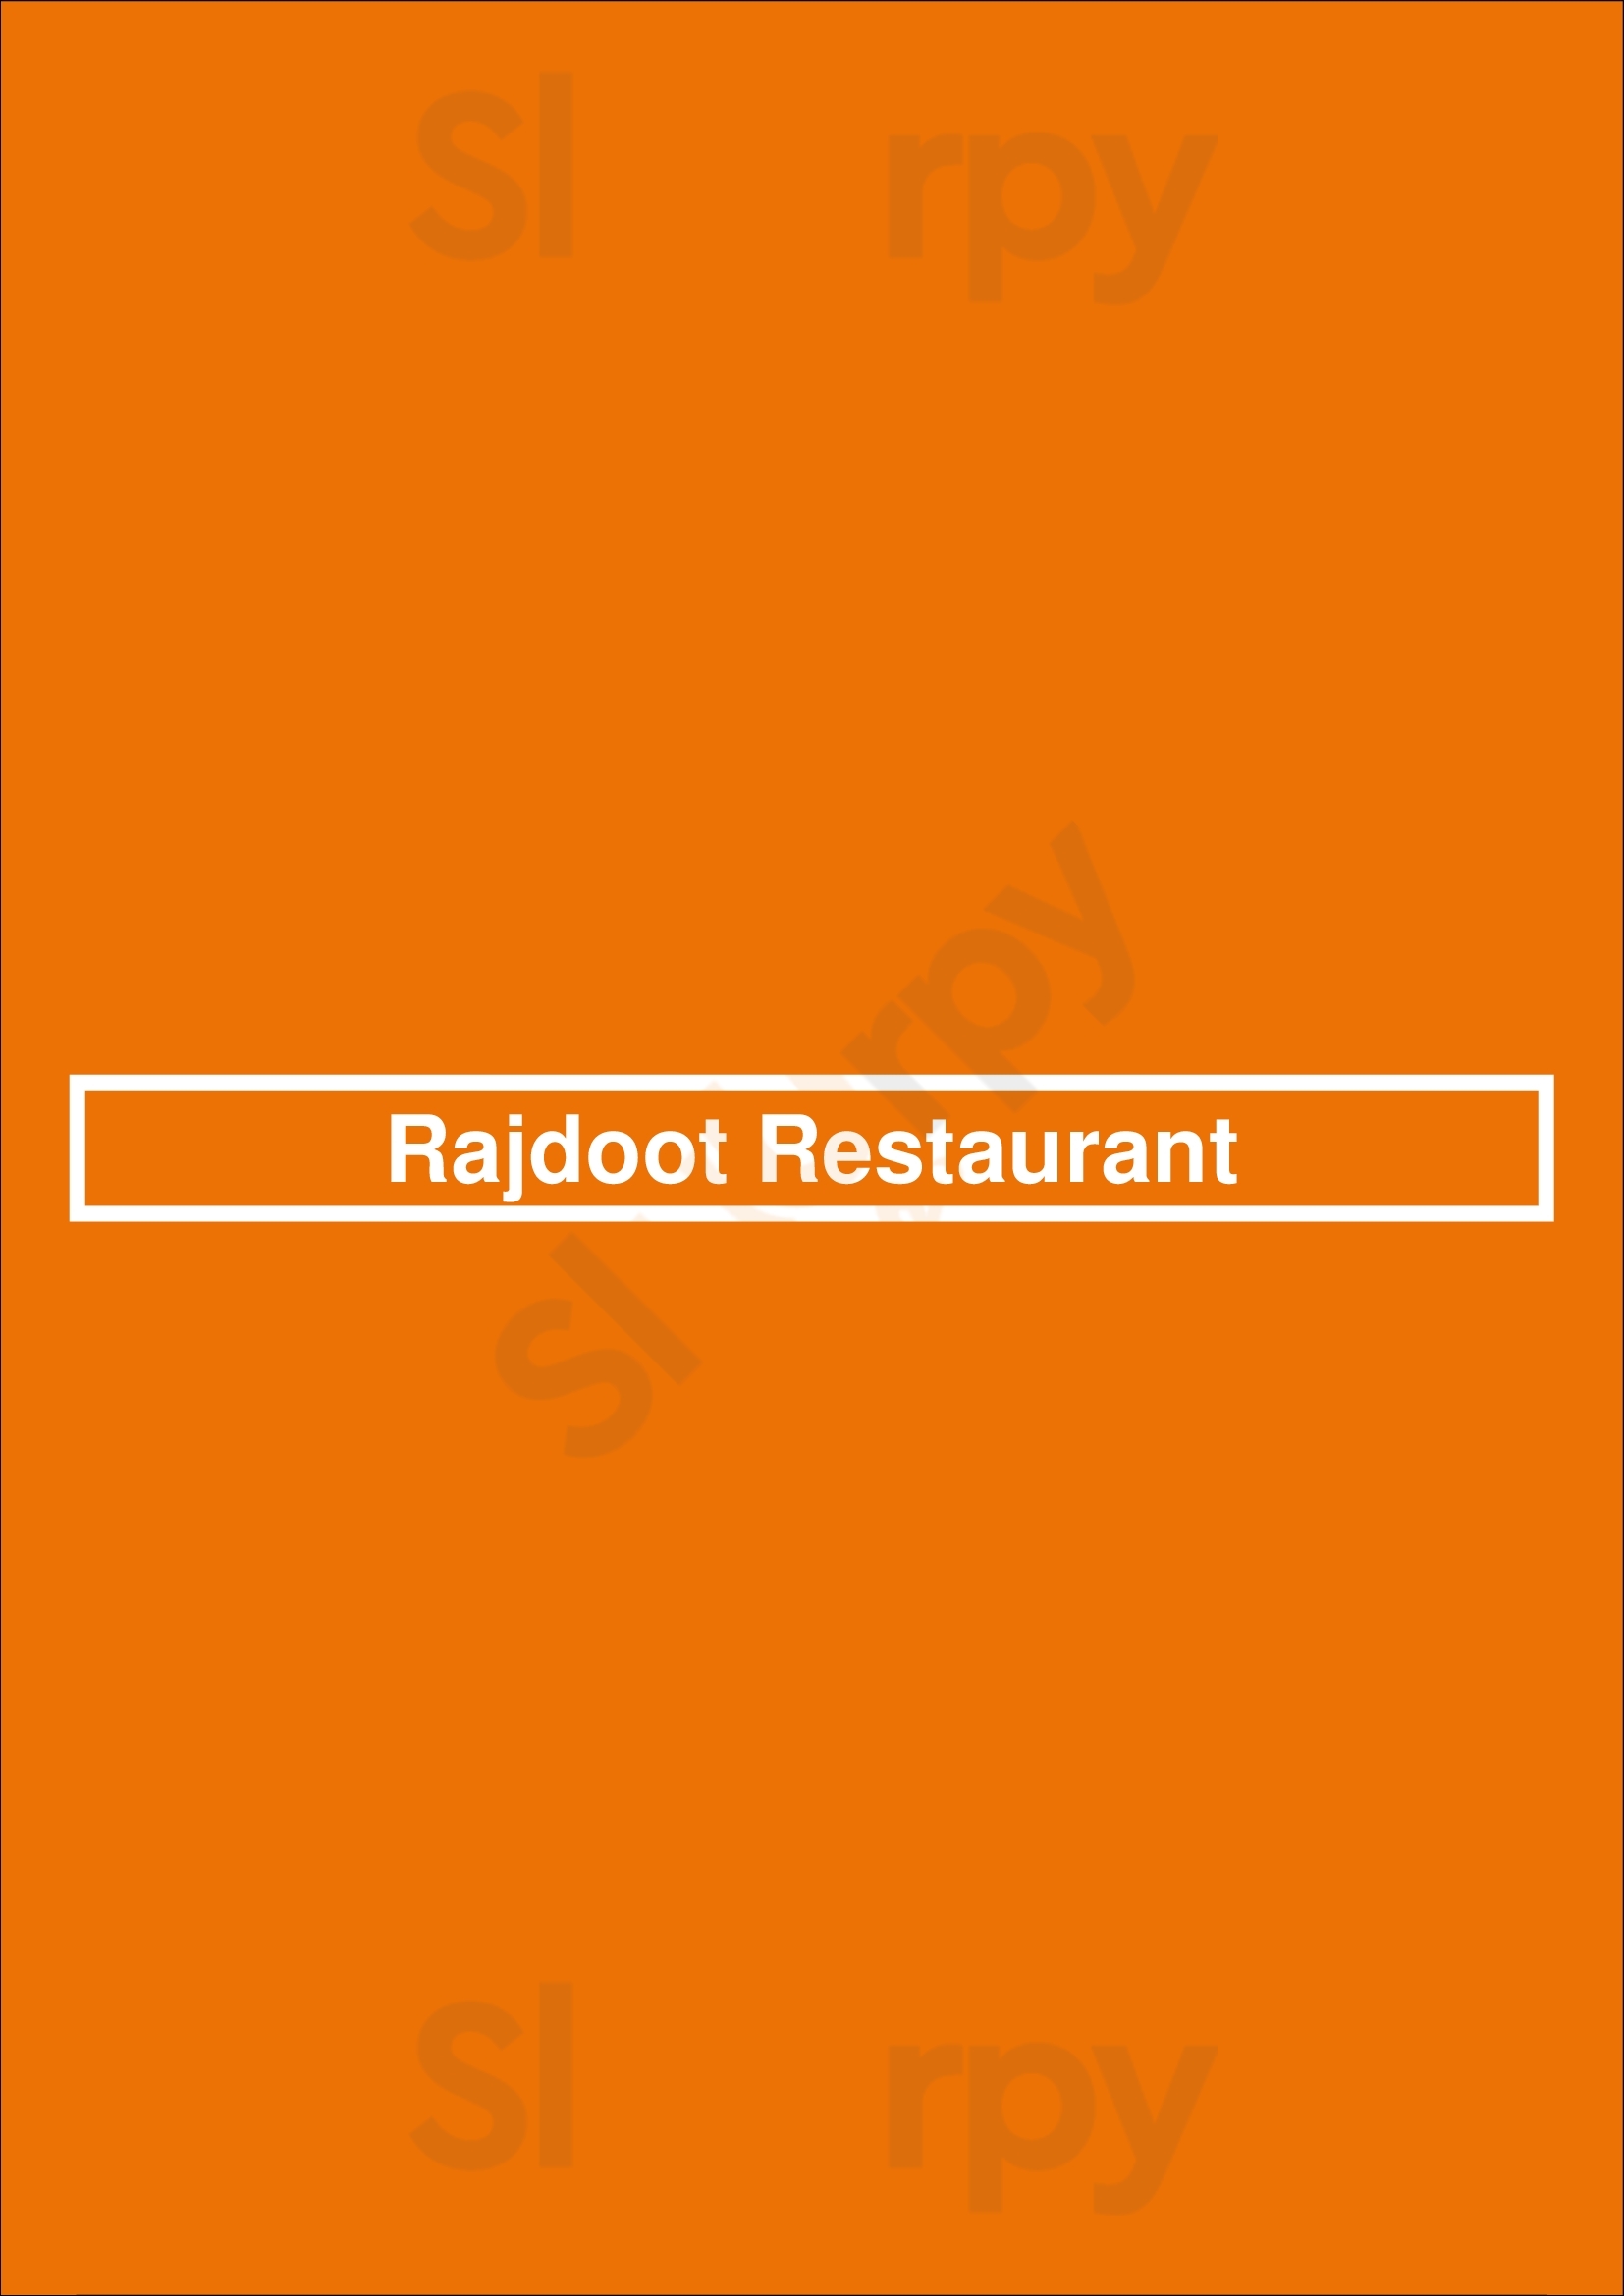 Rajdoot Restaurant Calgary Menu - 1